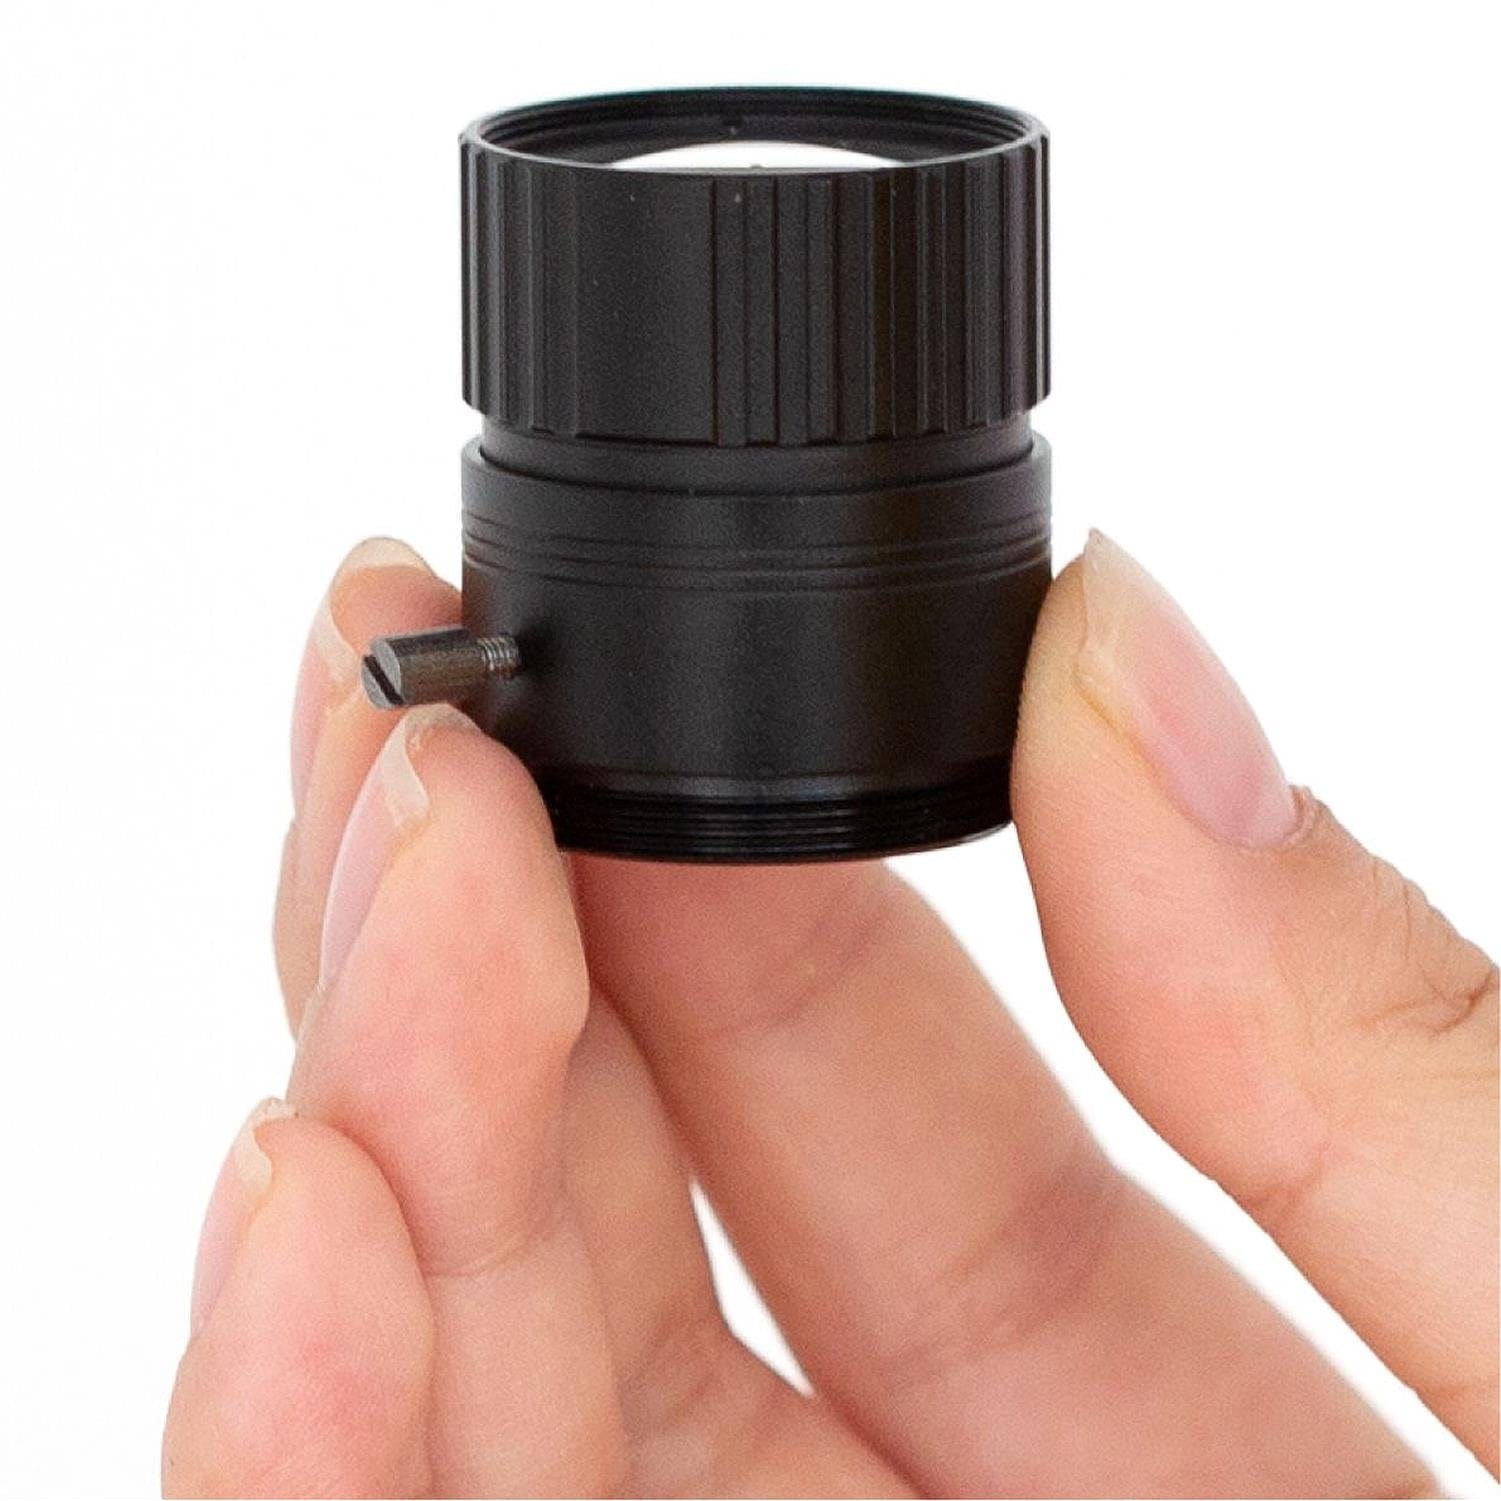 CS-Mount Lens for Raspberry Pi HQ Camera - 25mm Focal Length - The Pi Hut